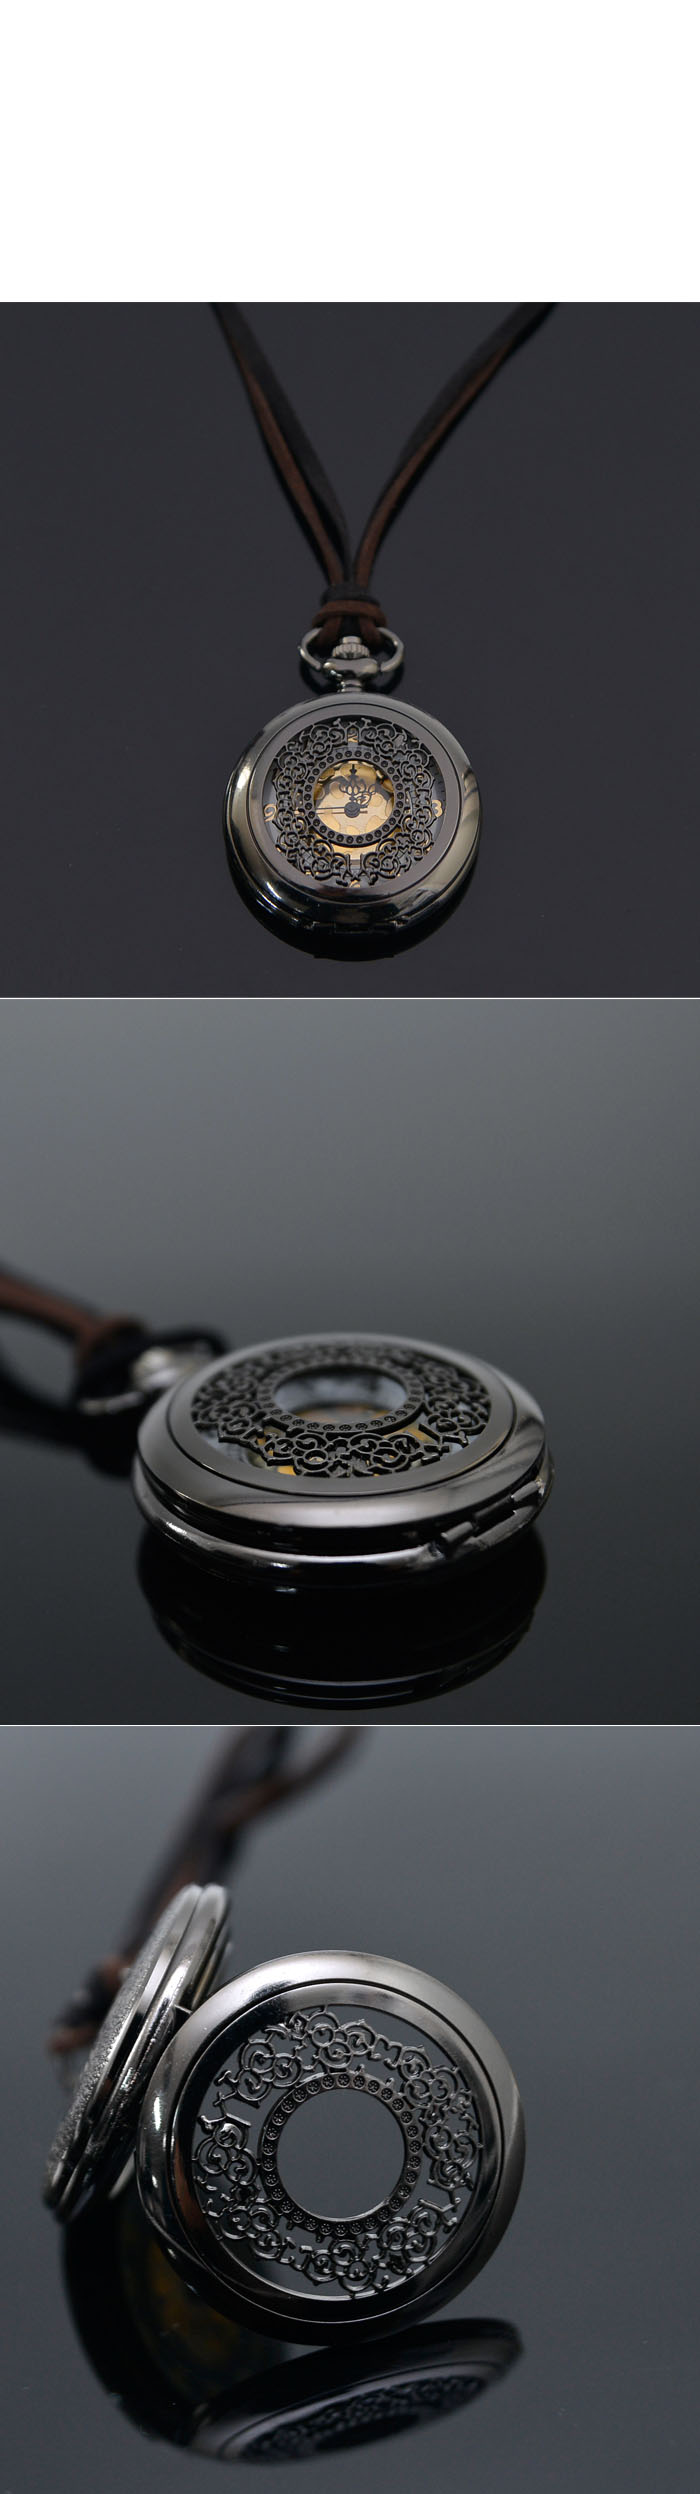 Accessories :: Necklaces :: Romantic Long Locket Watch-Necklace 183 ...